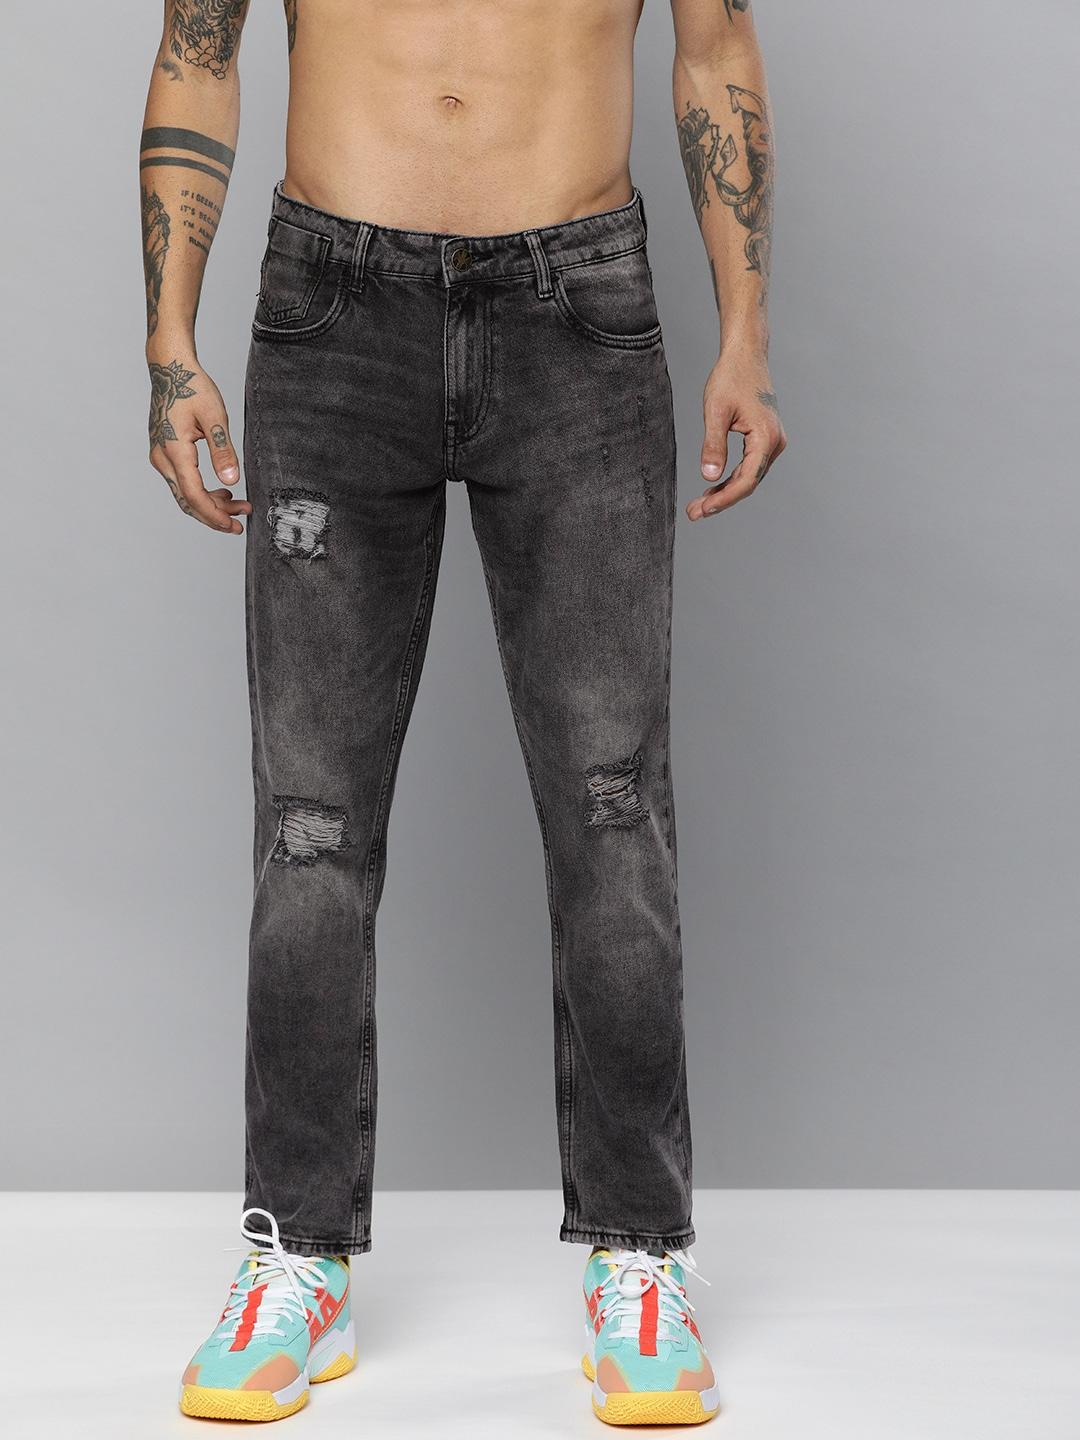 kook-n-keech-men-grey-slim-fit-mildly-distressed-light-fade-stretchable-jeans